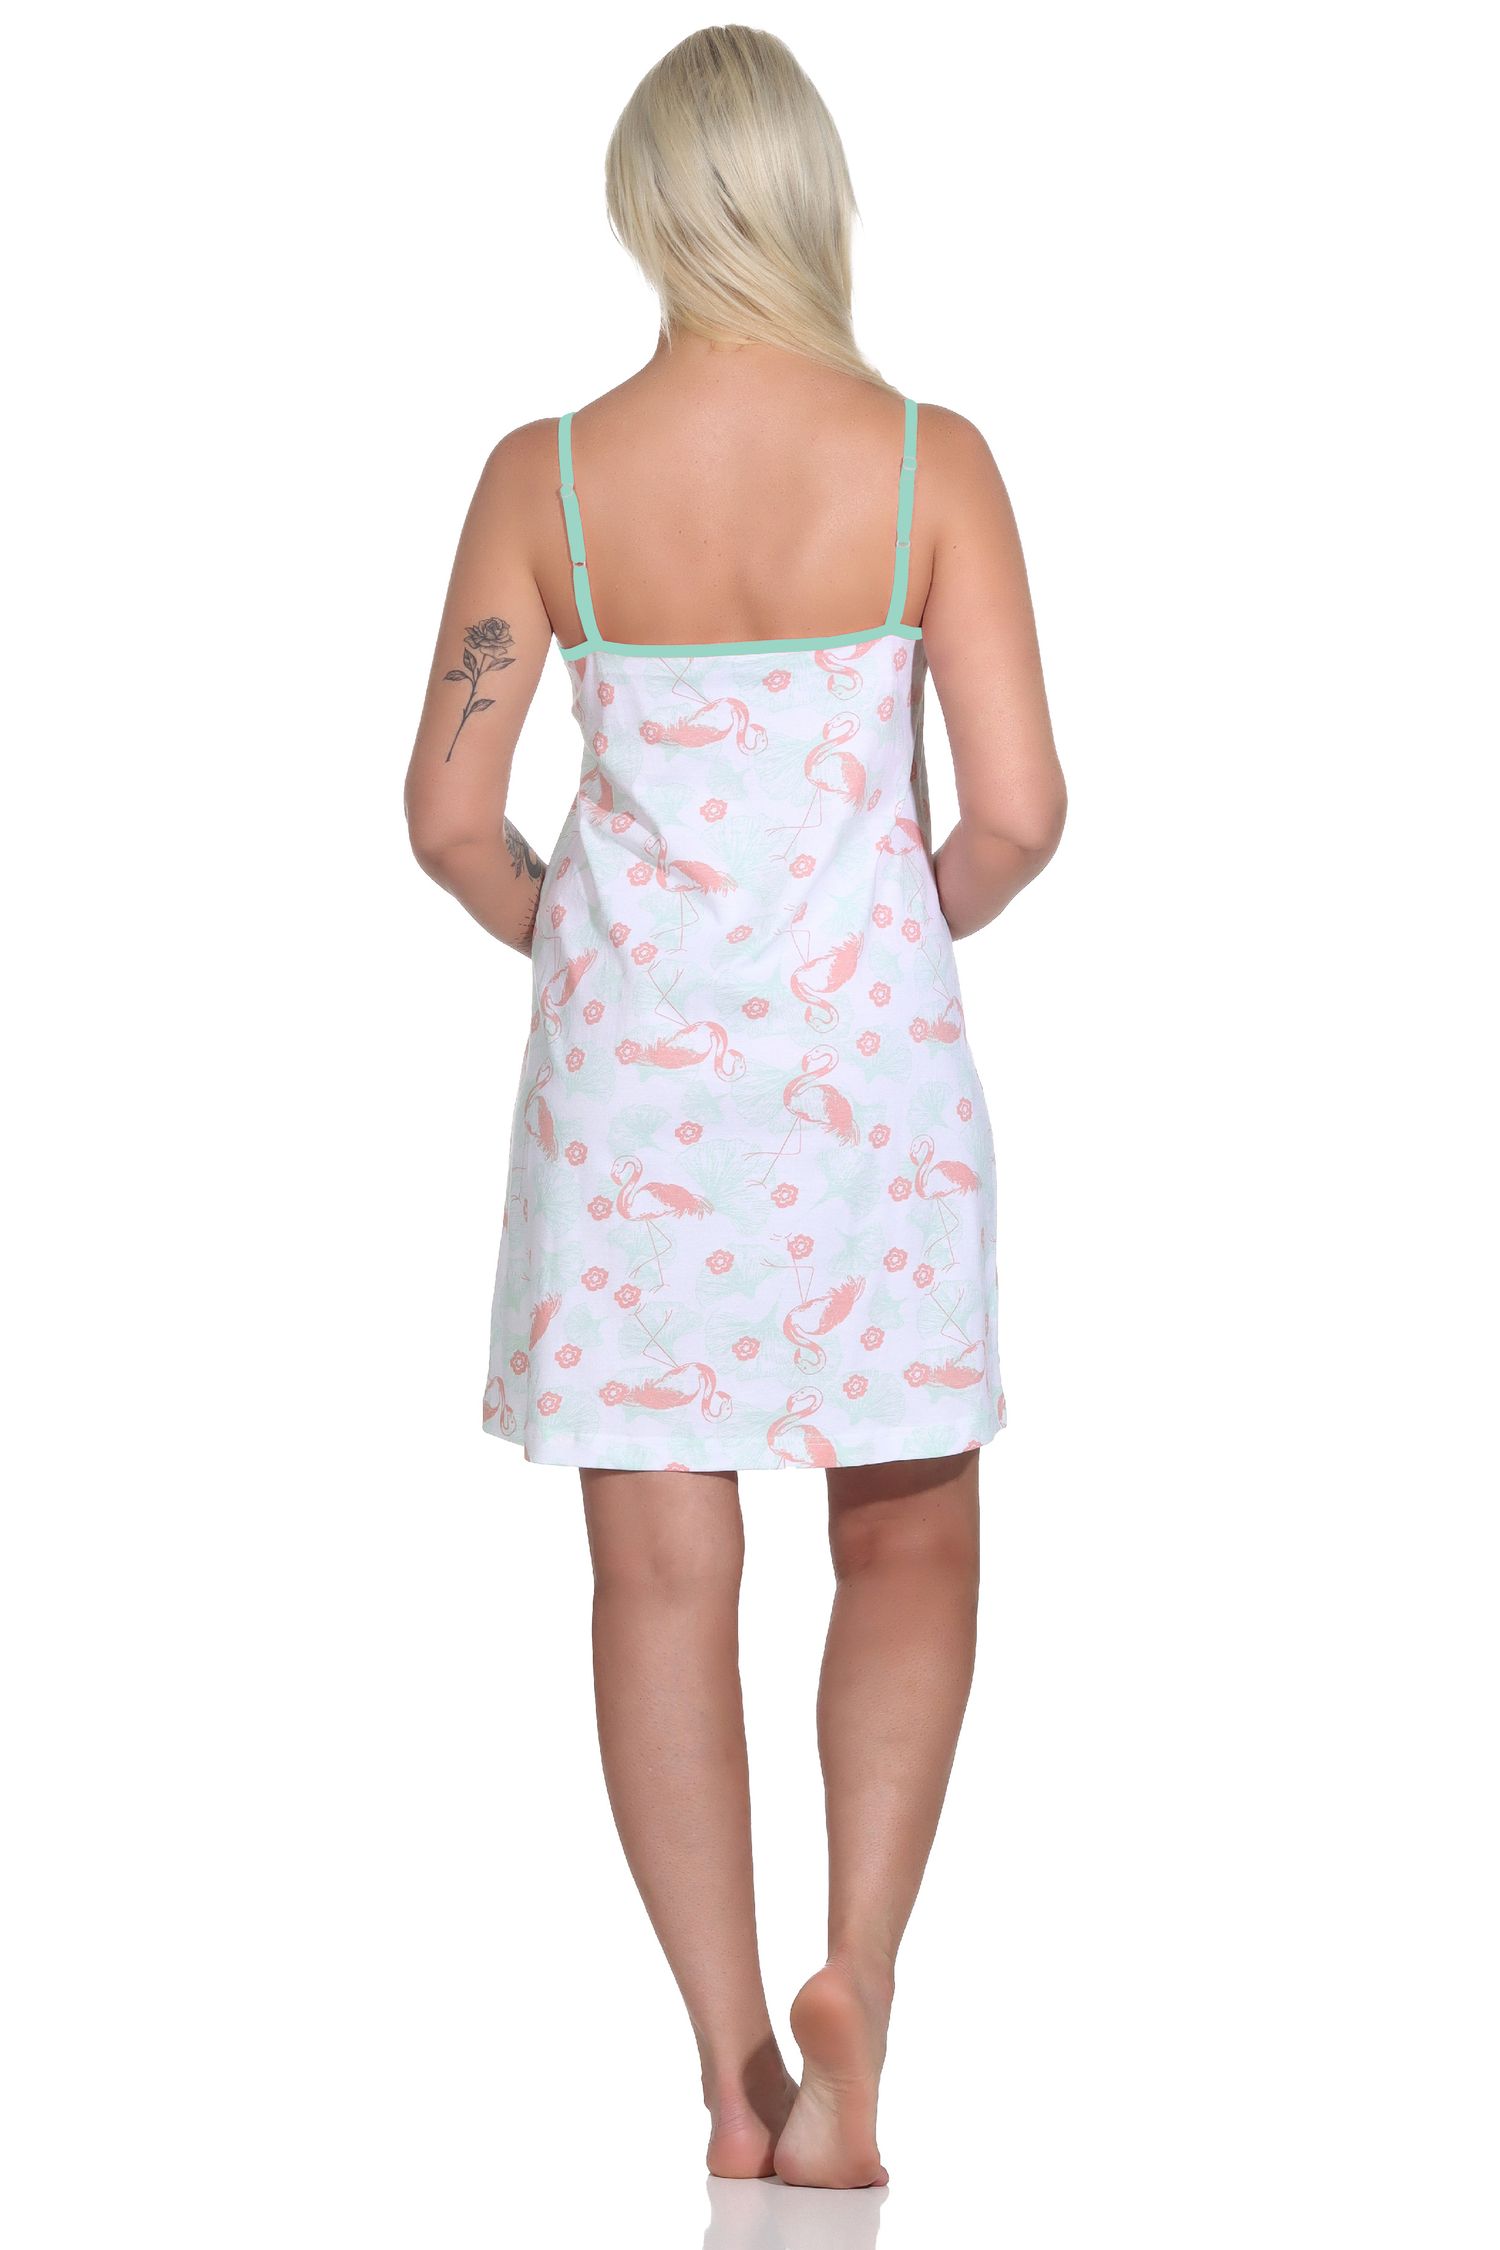 Normann Damen Spaghetti-Träger Nachthemd mit Flamingo Motiv